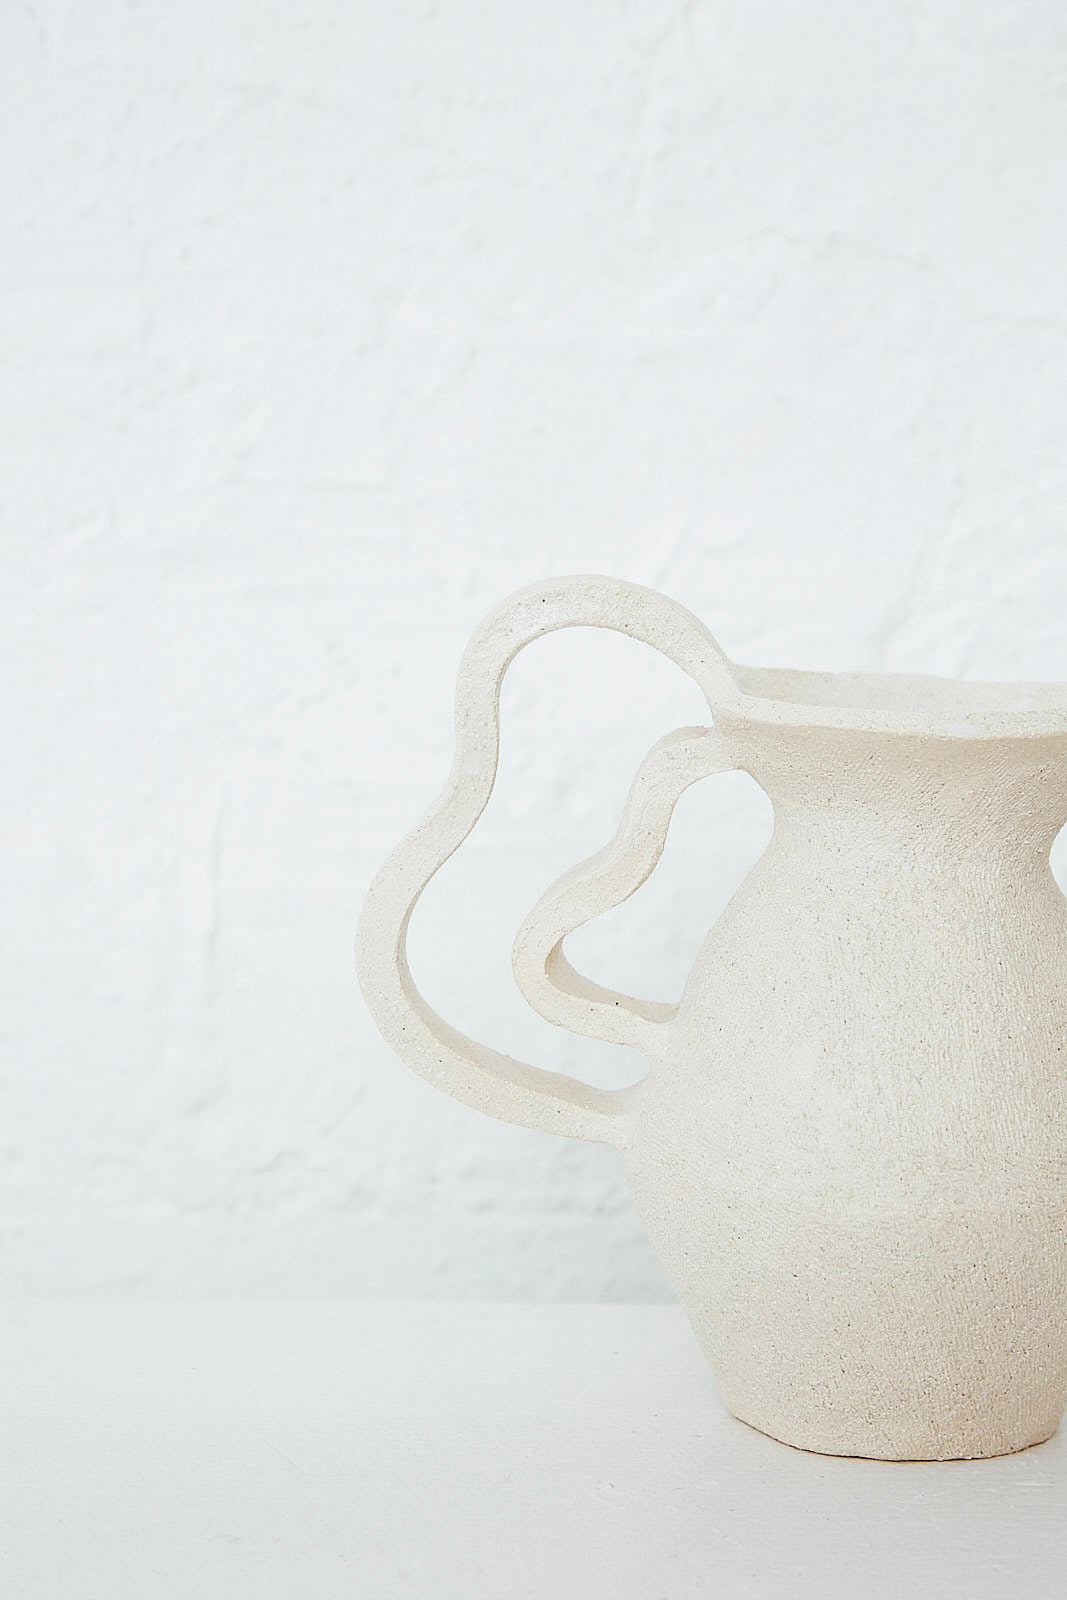 An Amphora Le Petit Doubles Vagues vase sitting on a white table. Designed by Clandestine.